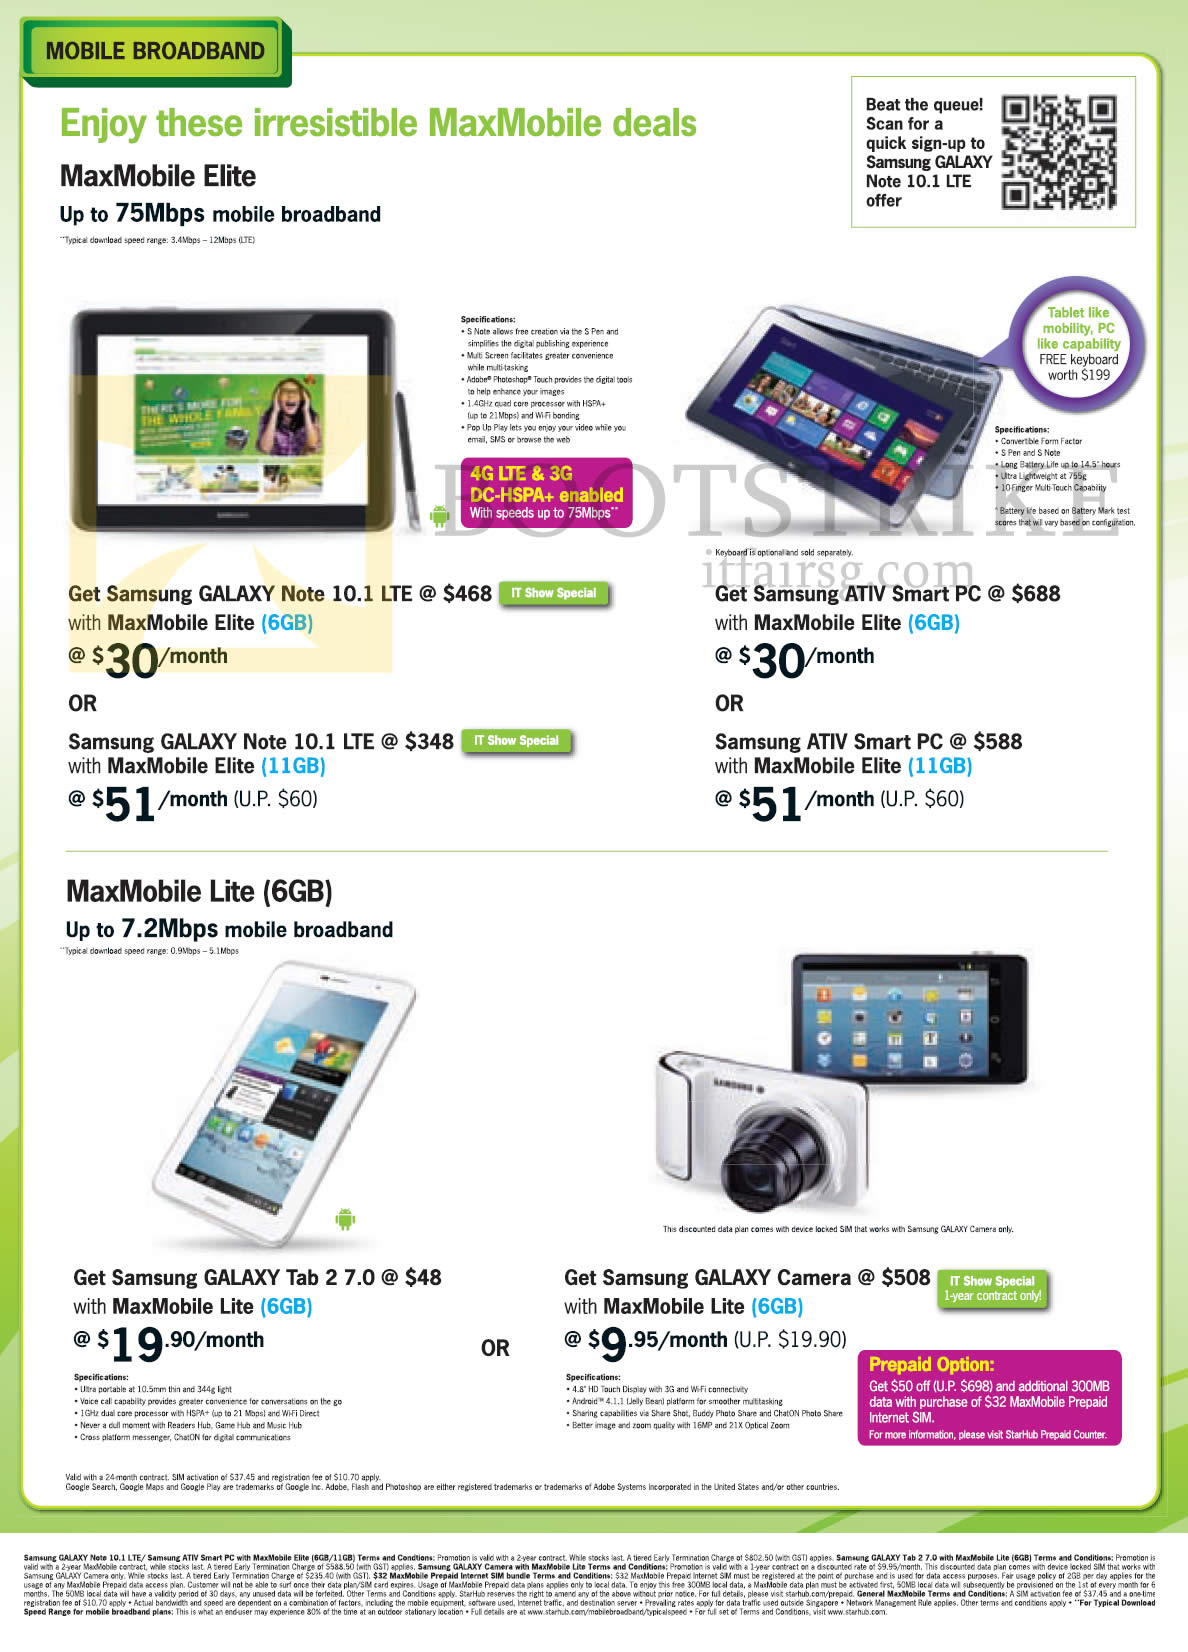 IT SHOW 2013 price list image brochure of Starhub Broadband Mobile MaxMobile Elite Samsung Galaxy Note 10.1, Galaxy Tab 2 7.0, Galaxy Camera, ATIV Smart PC